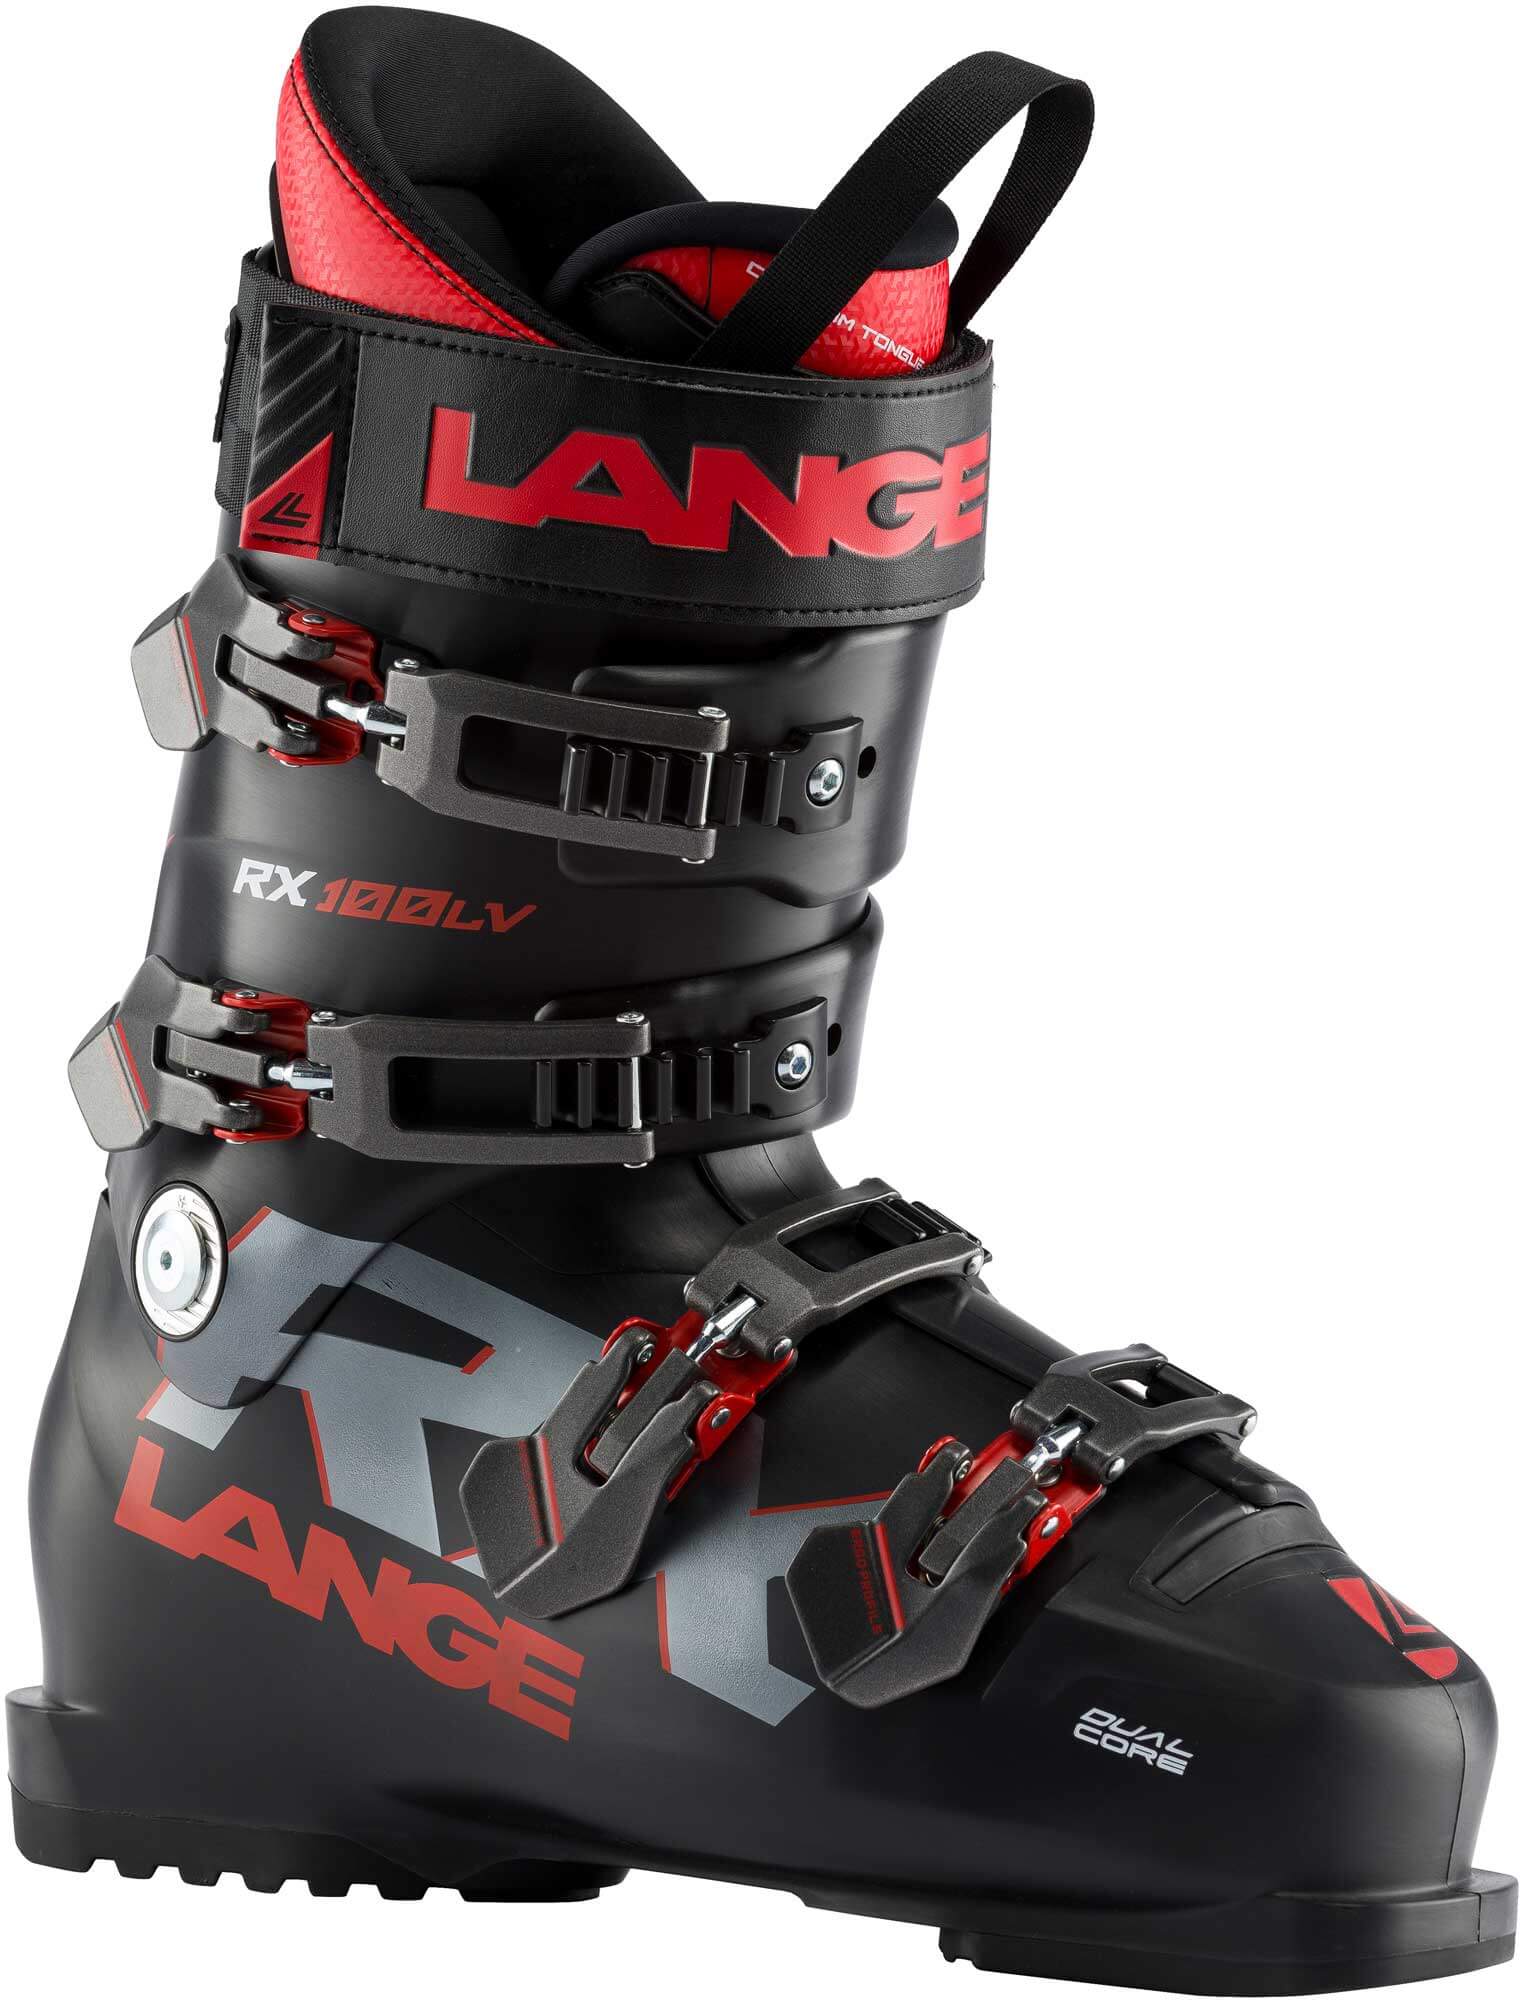 Lange RX 100 LV Ski Boots 2020 - The Boot Pro